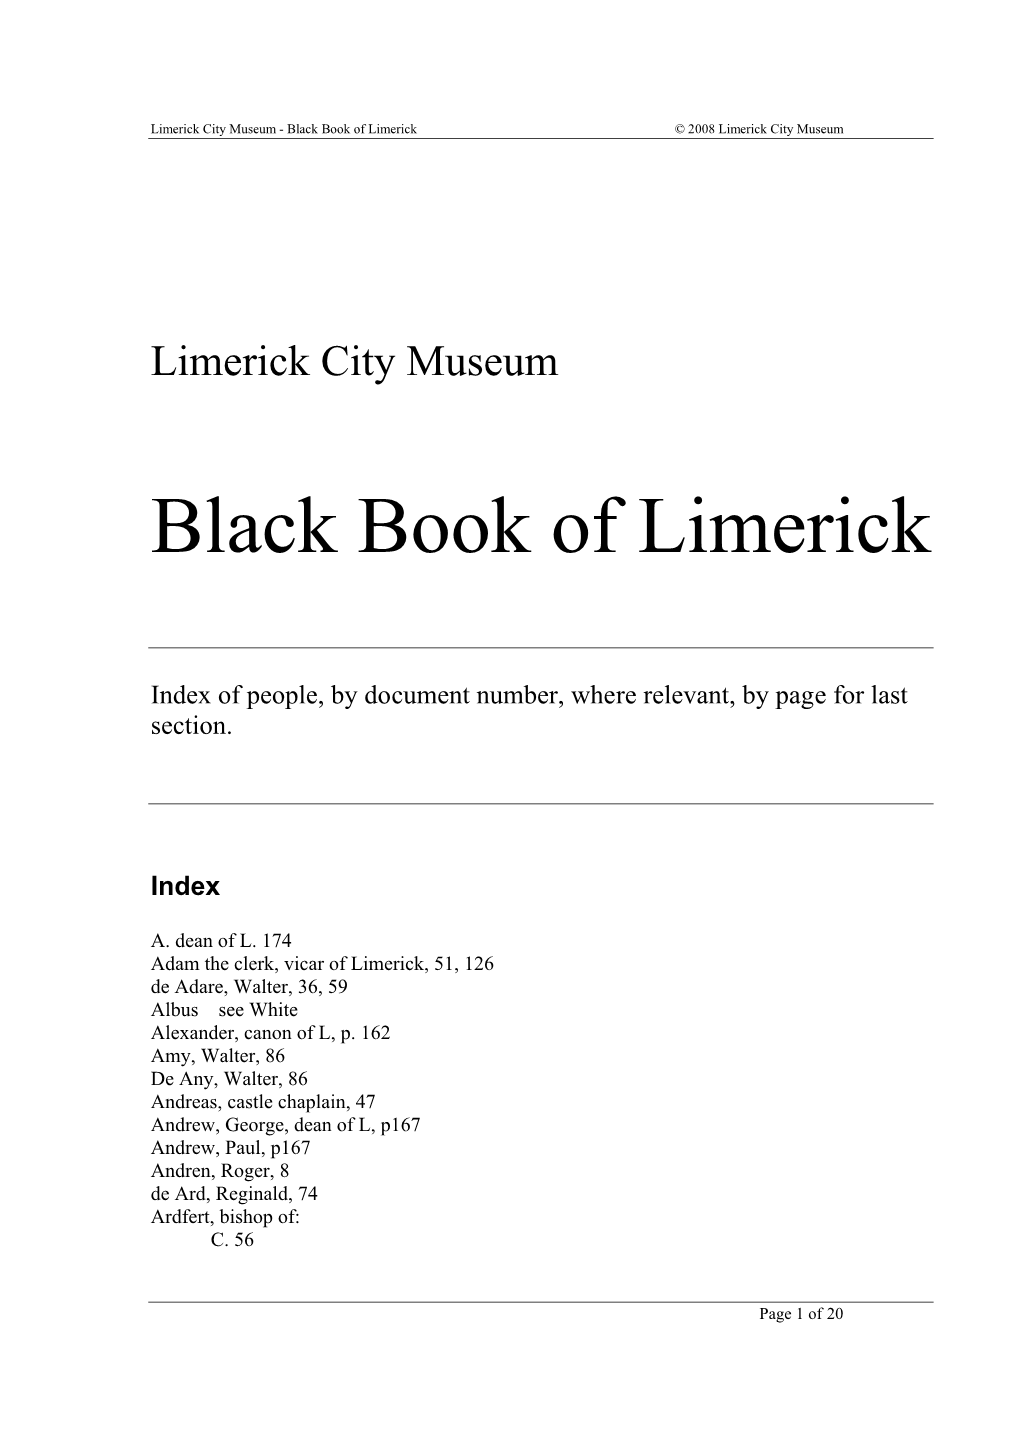 Black Book of Limerick © 2008 Limerick City Museum